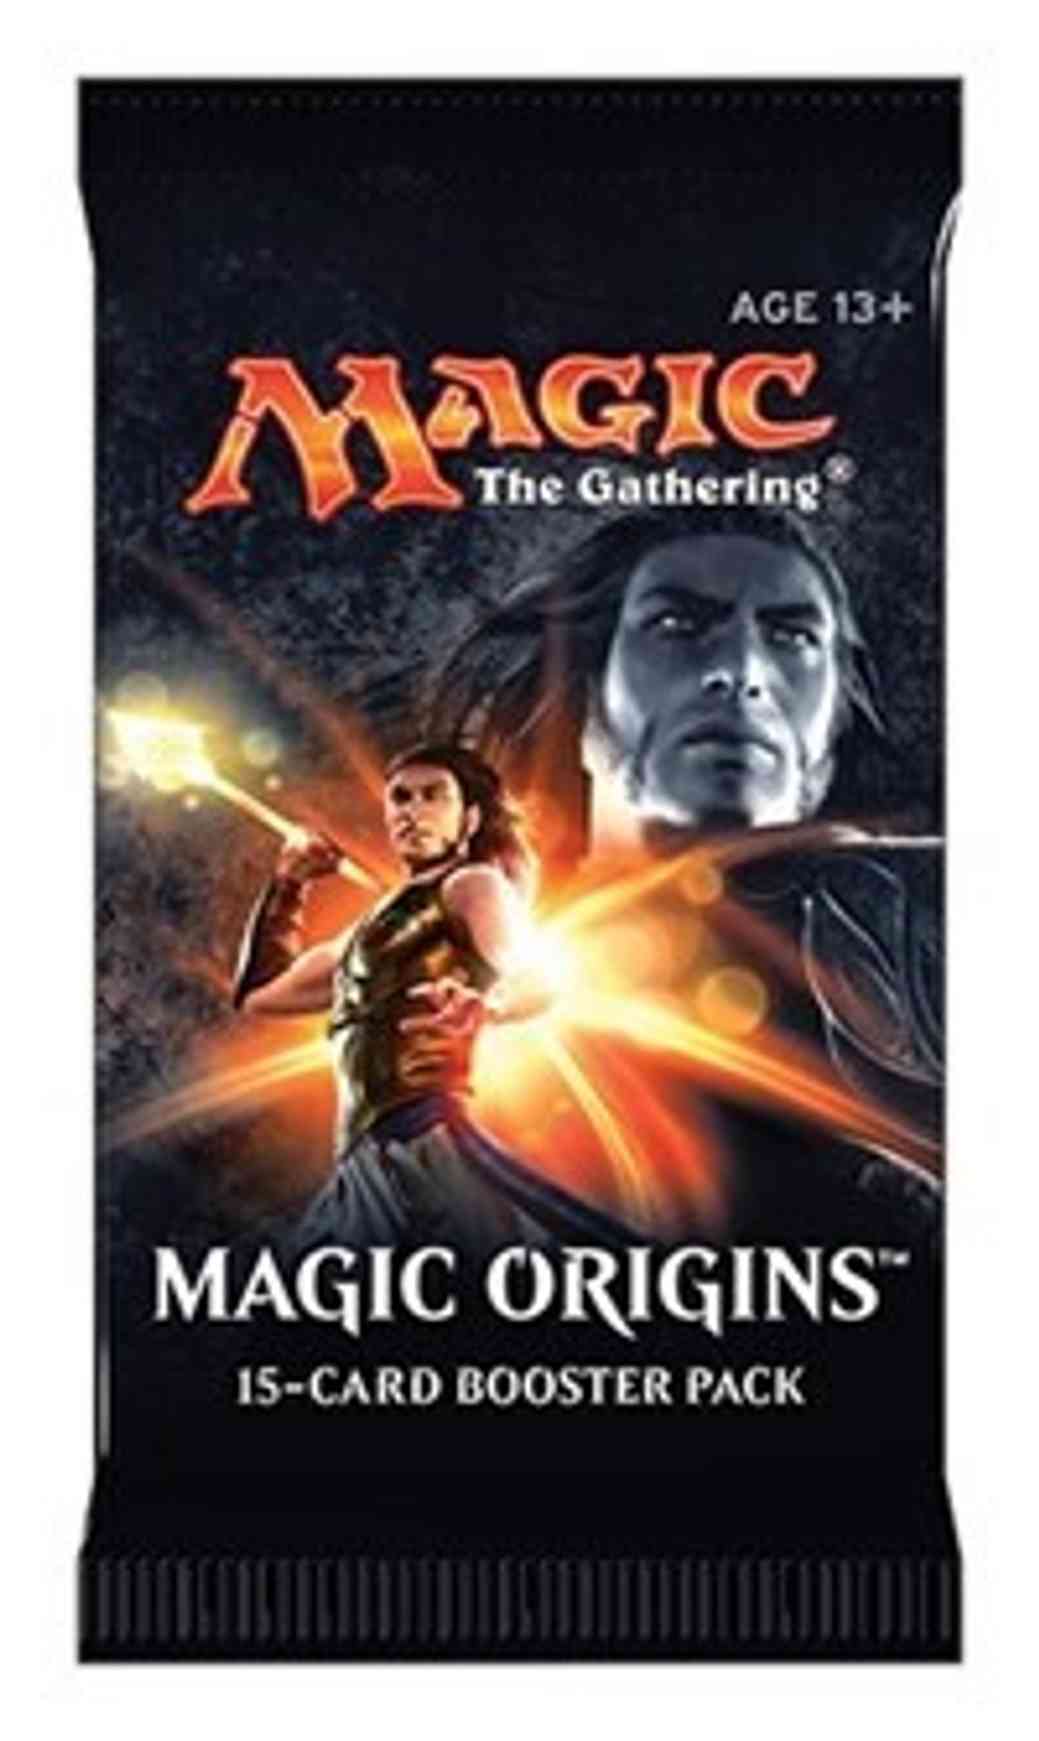 Magic Origins - Booster Pack magic card front